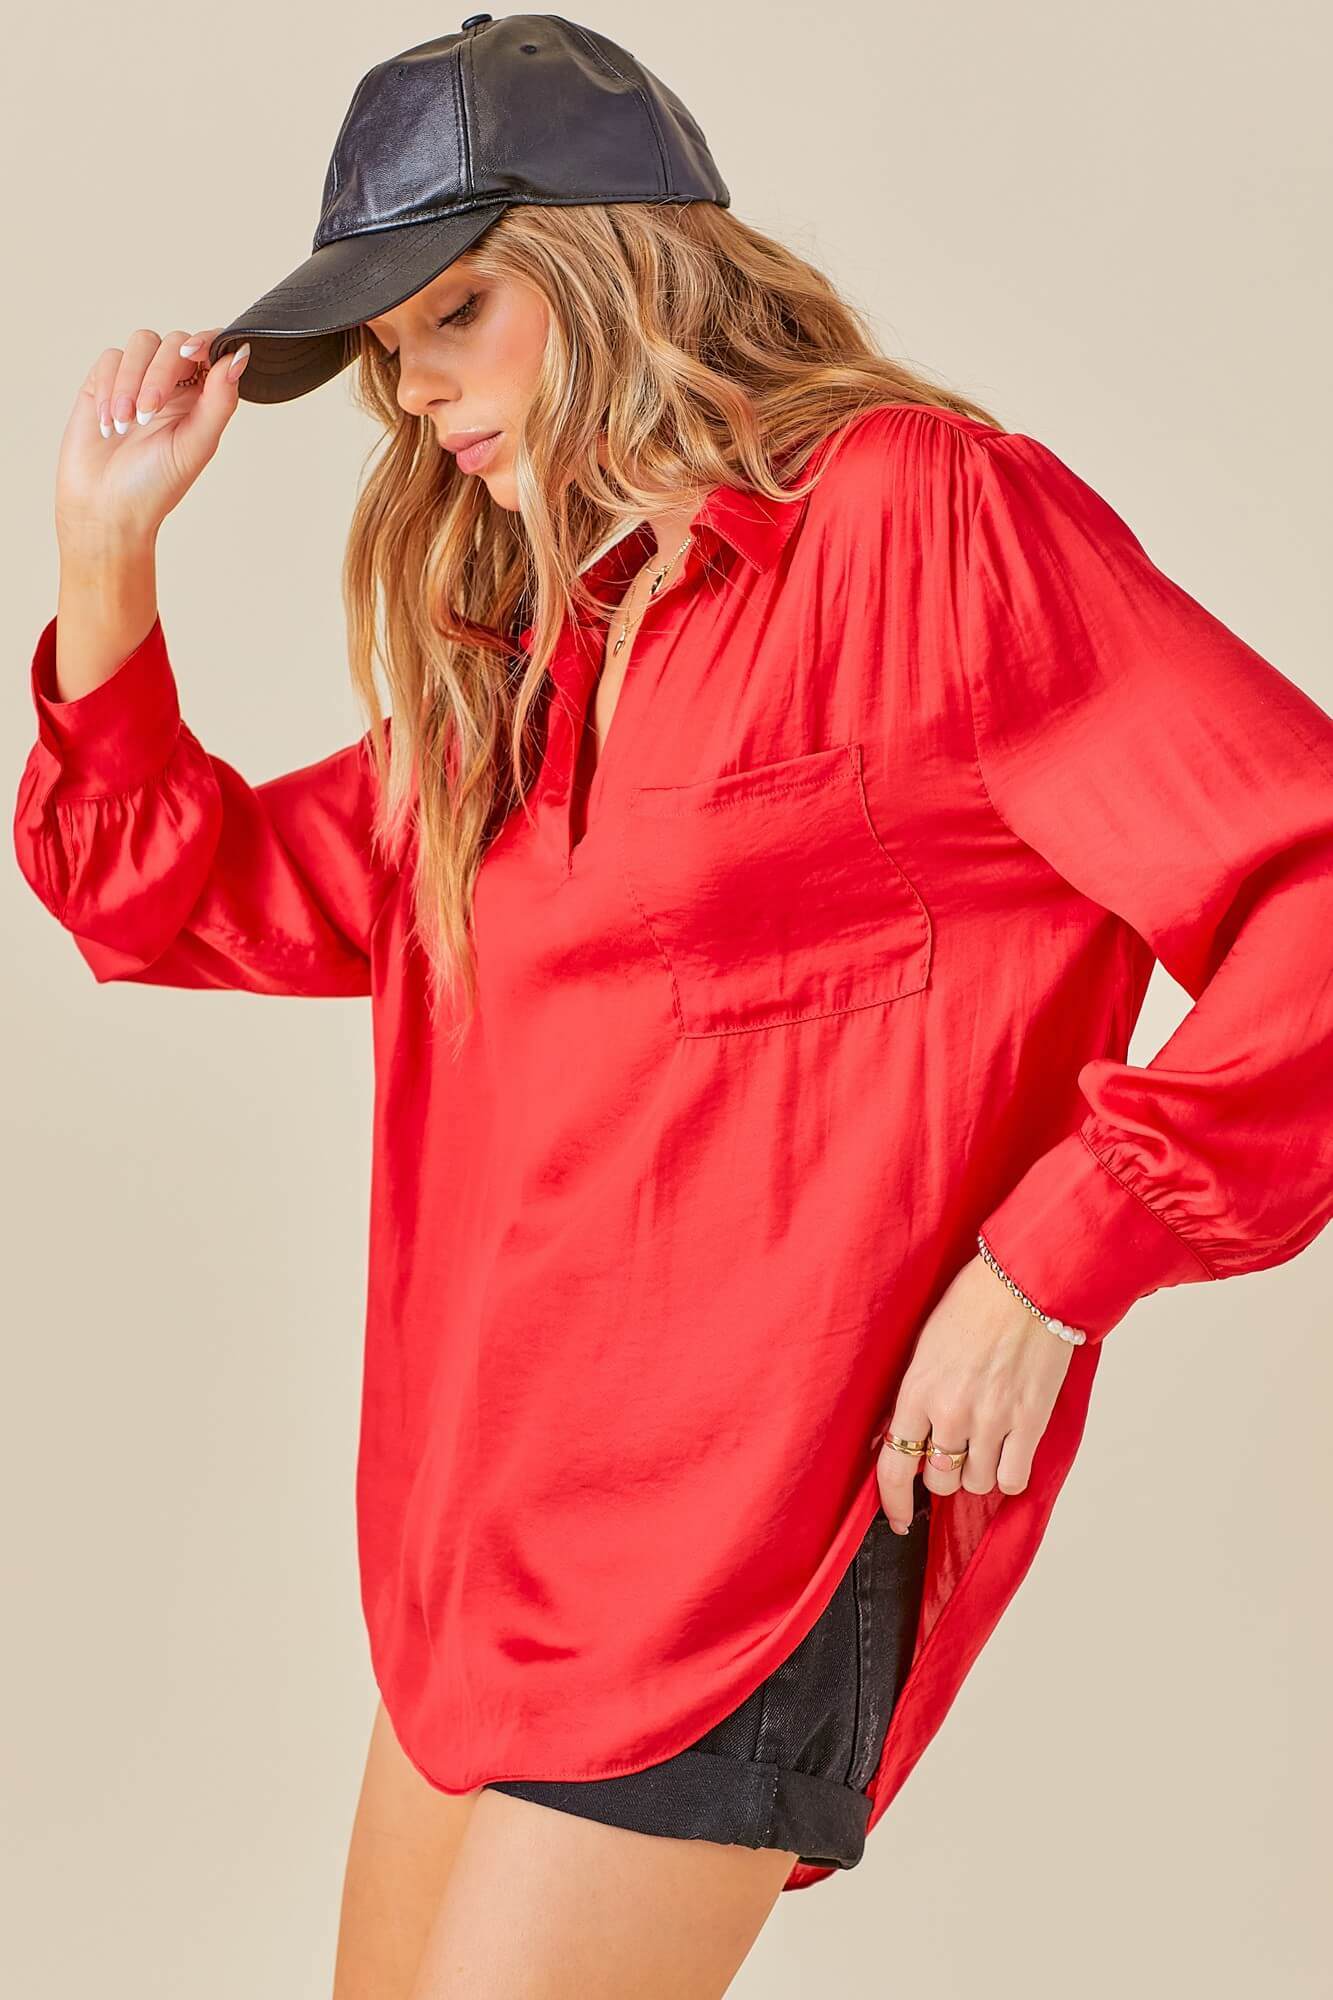 Shop Women's Tops, Blouses & Shirts – Zen + Zeus Clothing Co.